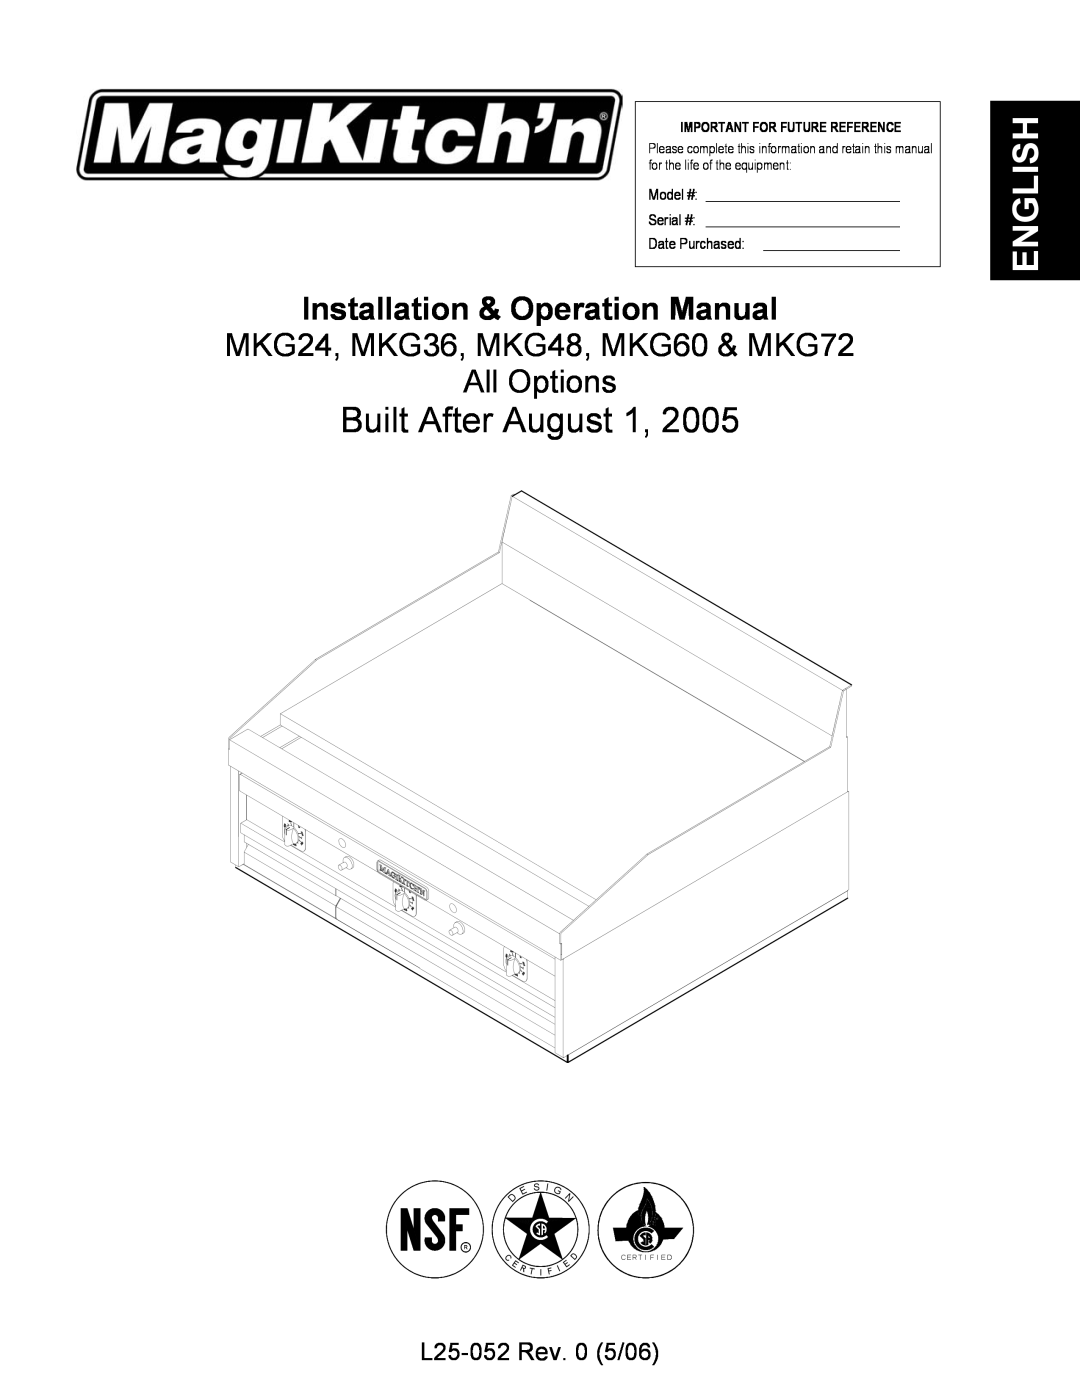 Magikitch'n MKG36, MKG72, MKG60 operation manual L25-052Rev. 0 5/06, Built After August, English, C E R T I F I E D 